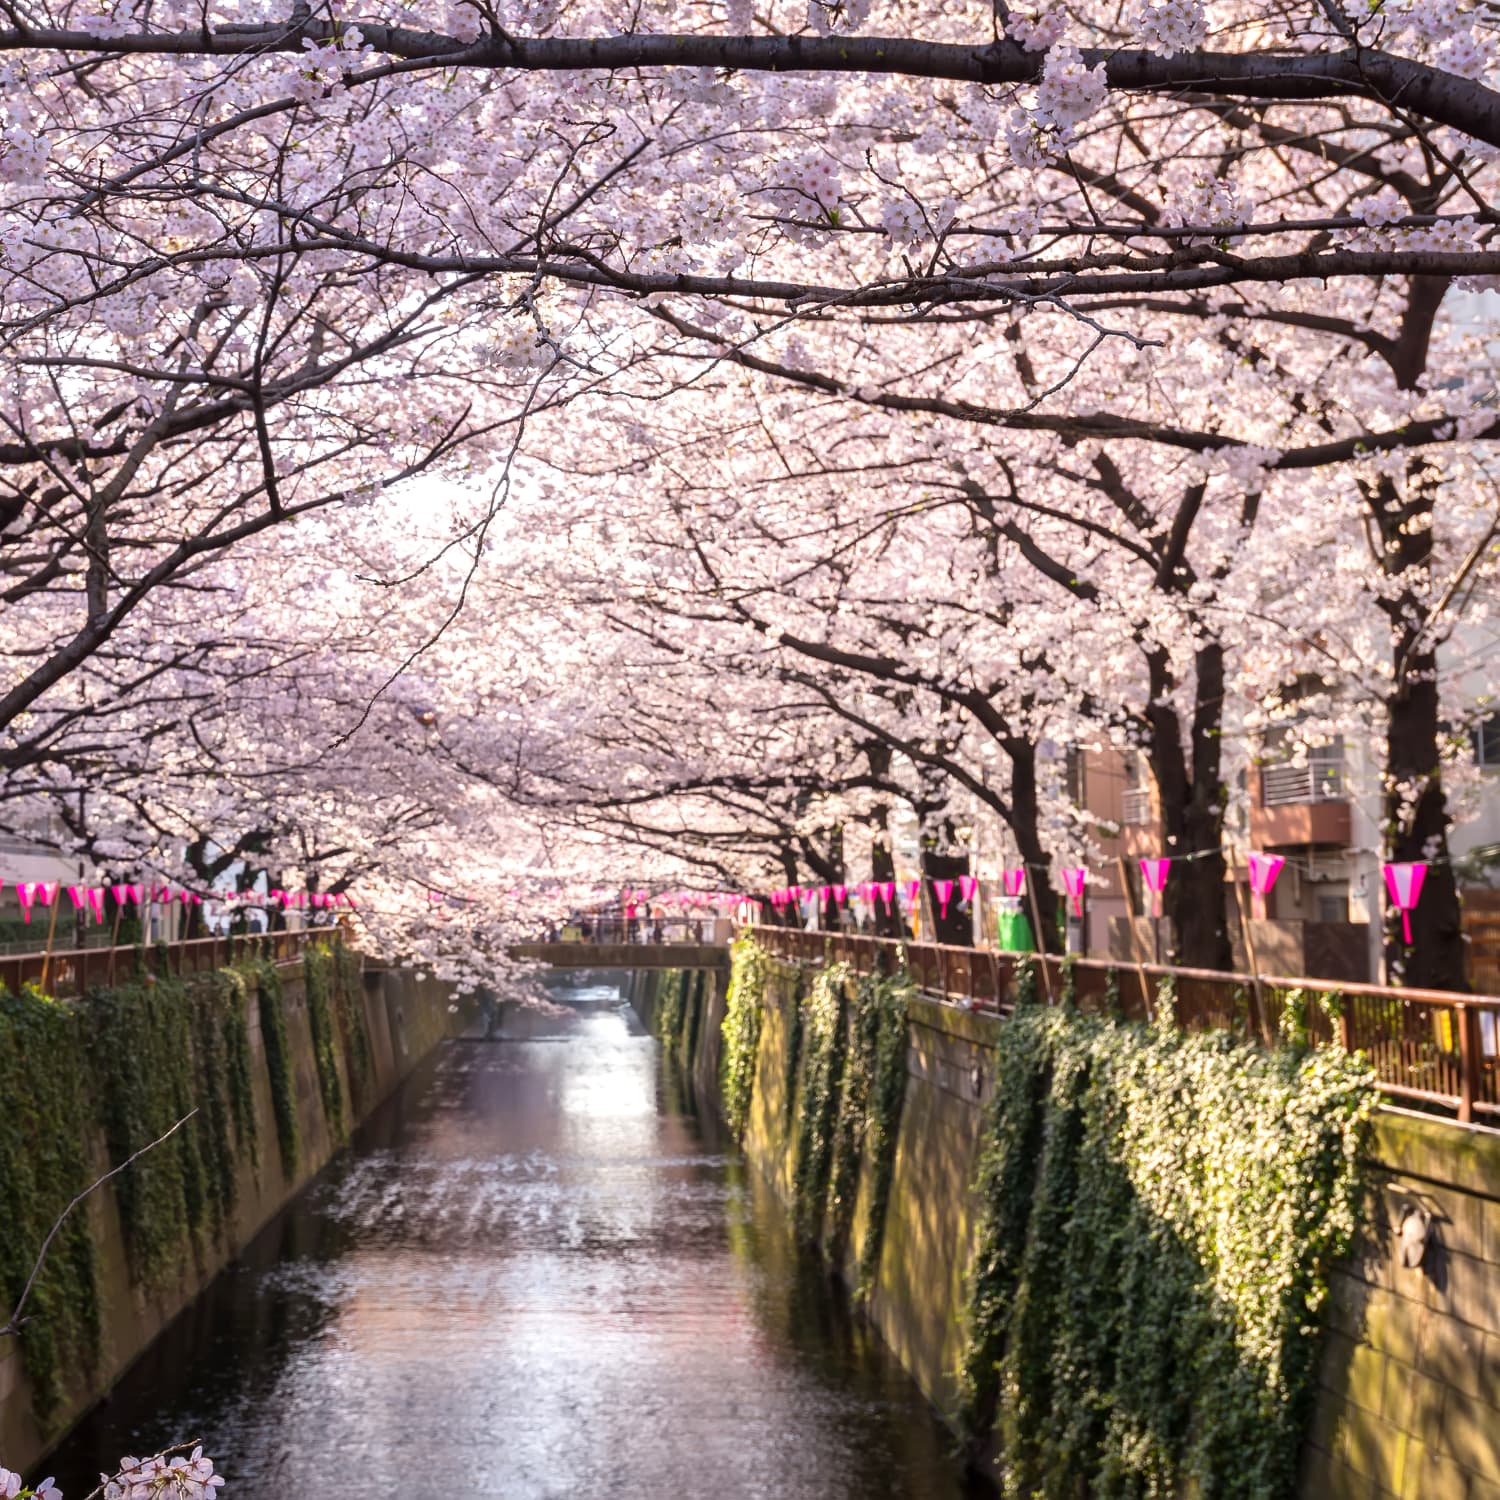 Cherry blossom trees virtual tour on Google Earth